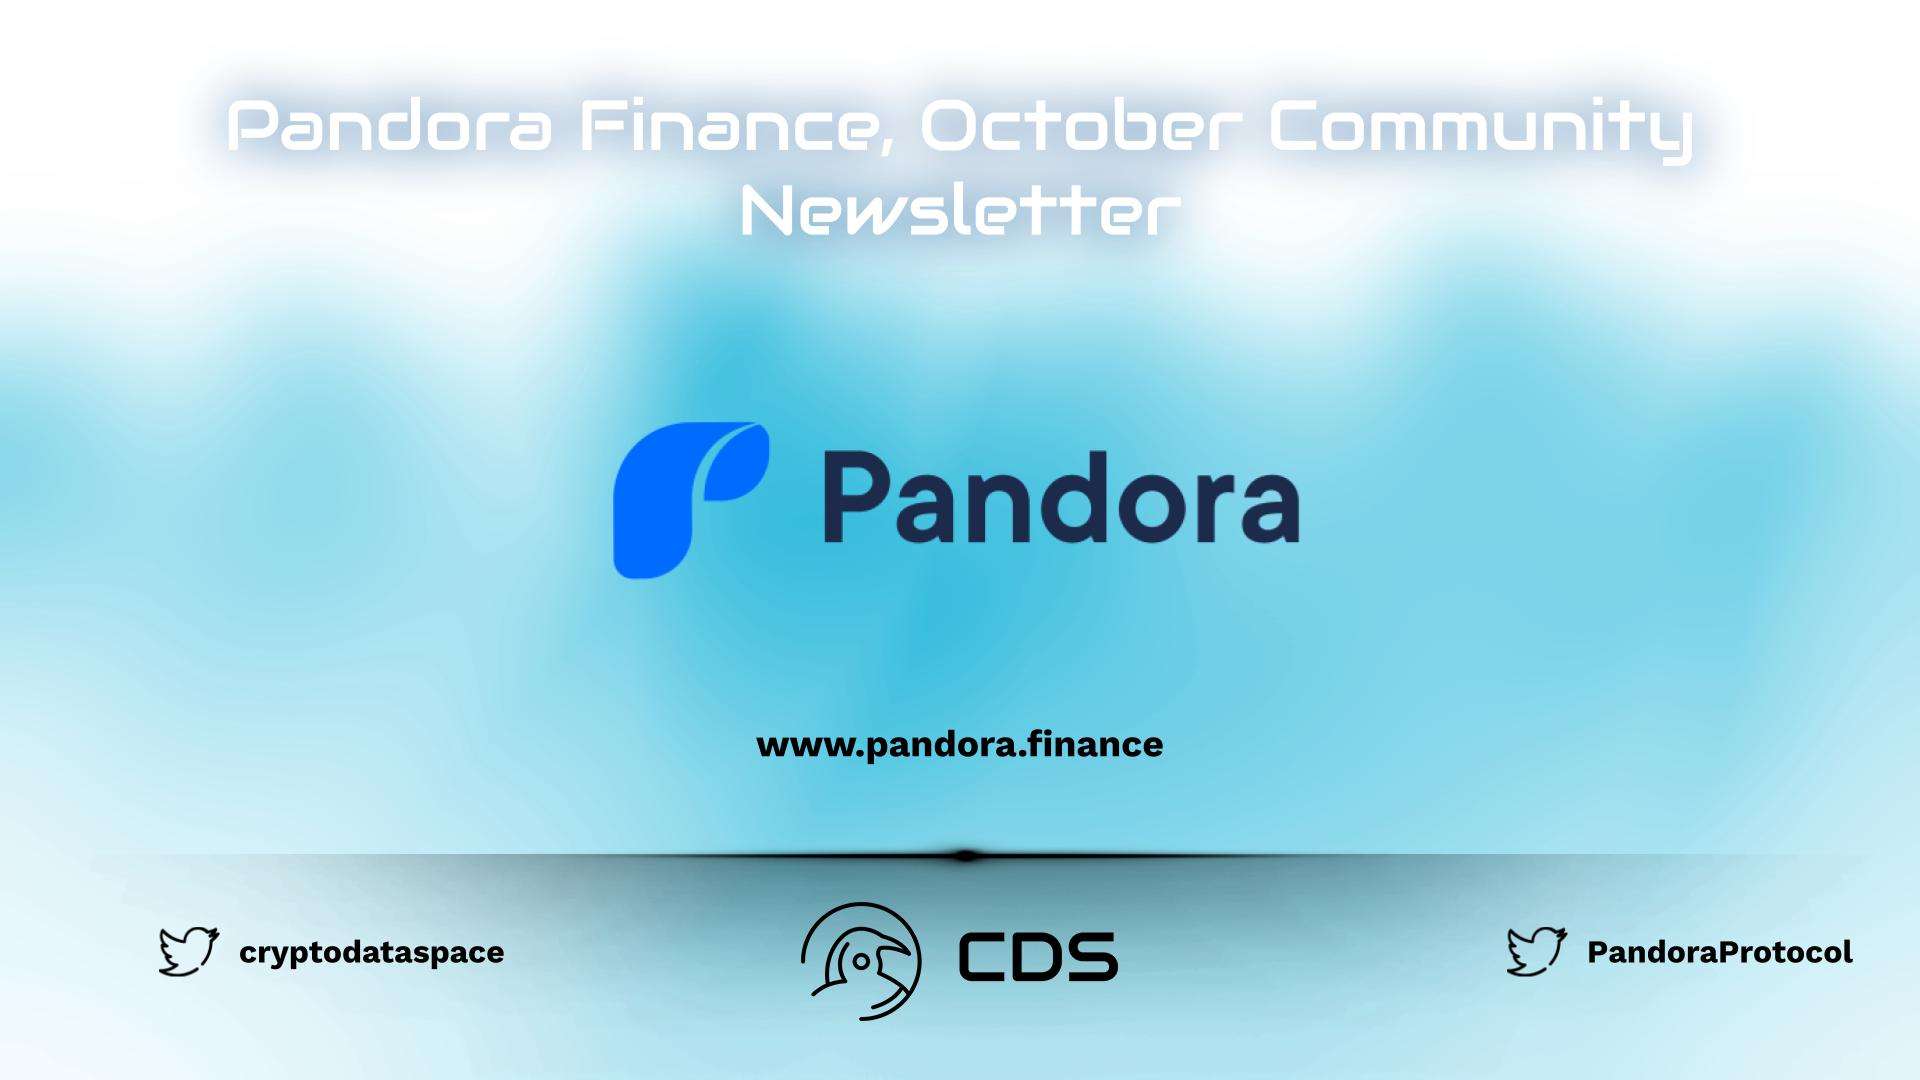 Pandora Finance, October Community Newsletter